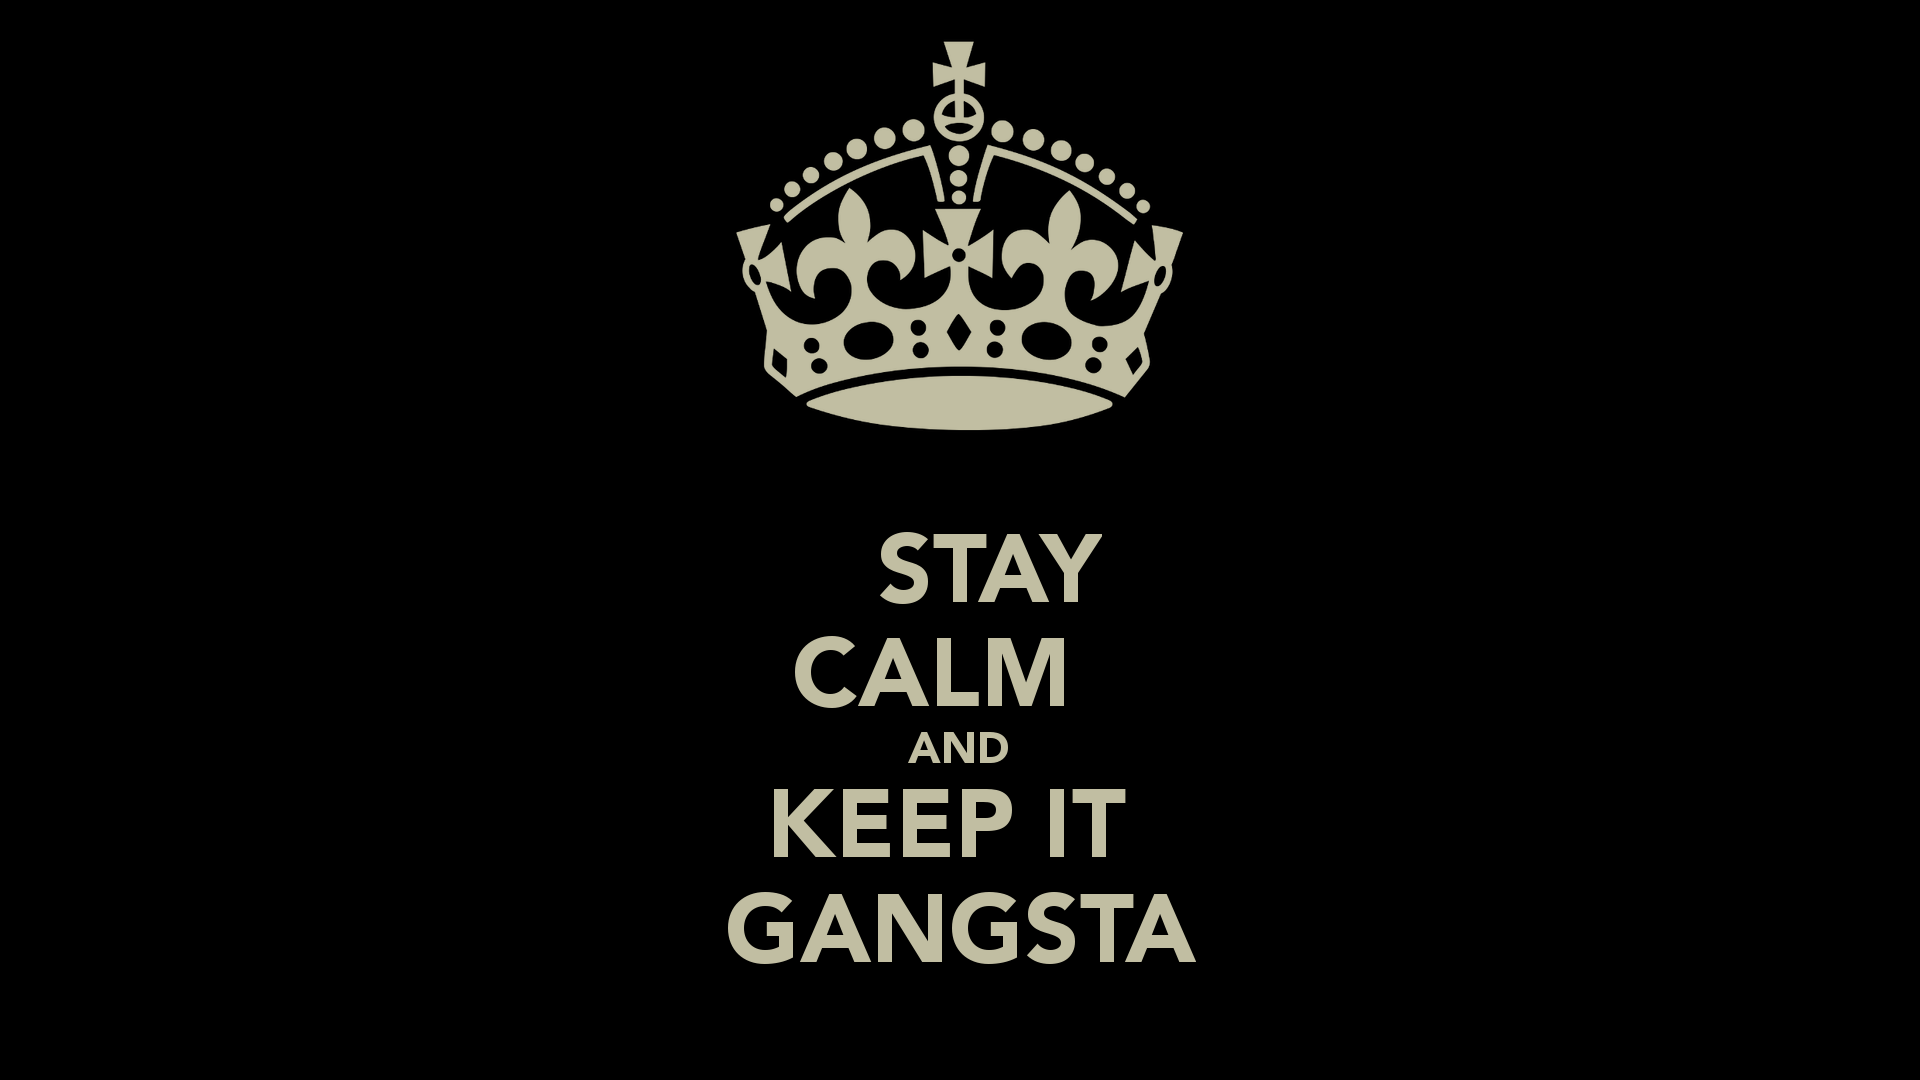 Gangster Money Logo - Money Logos Free Gangster Wallpapers | www.topsimages.com